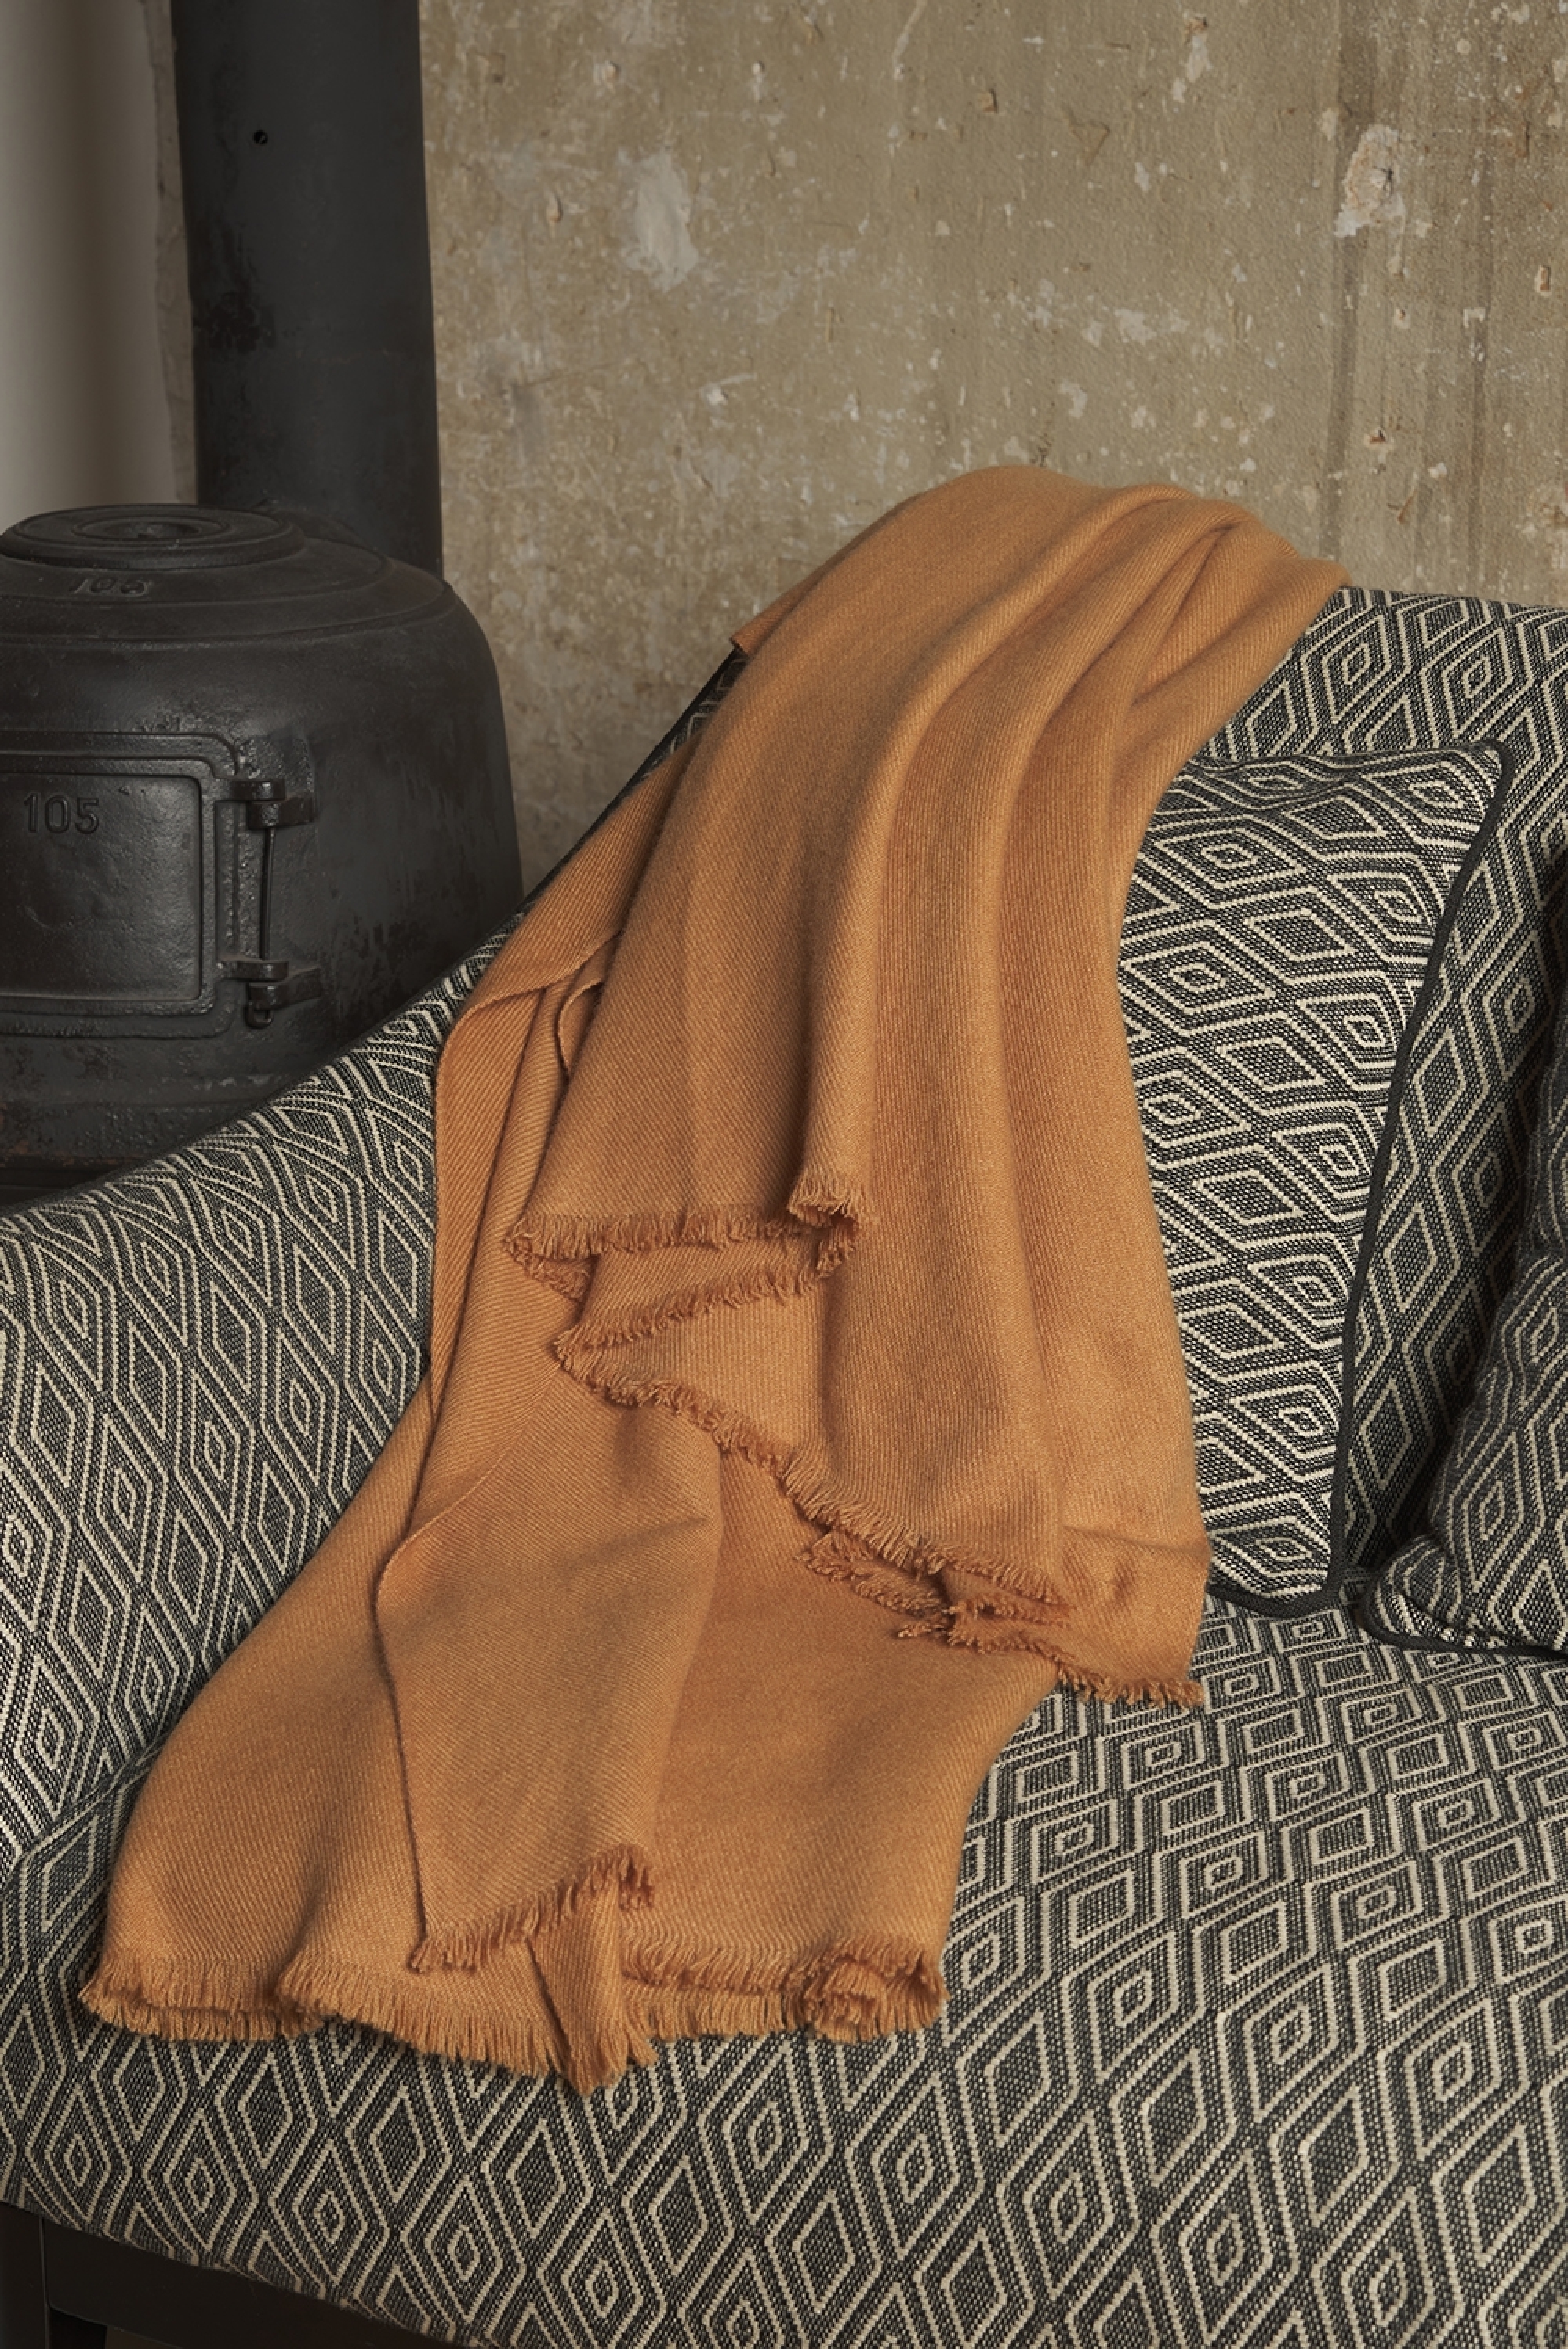 Cashmere accessories blanket toodoo plain xl 240 x 260 camel desert 240 x 260 cm